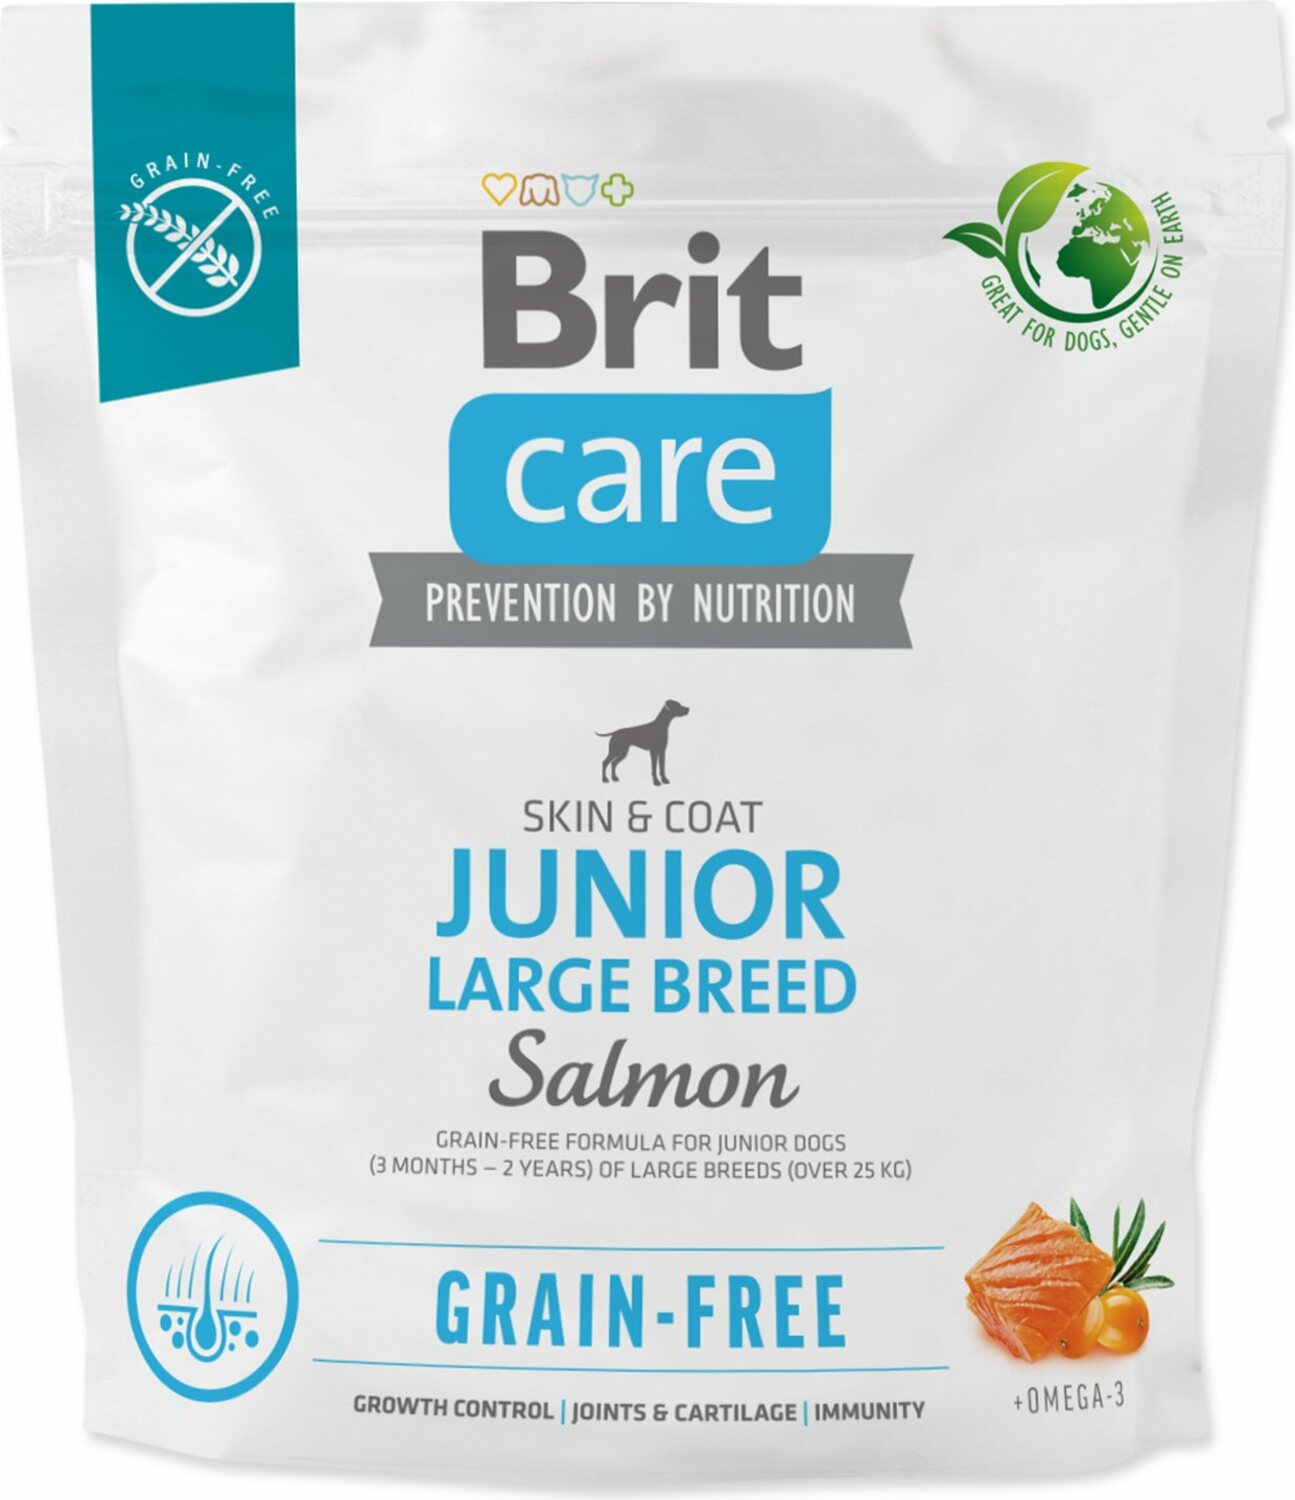 Krmivo Brit Care Dog Grain-free Junior Large Breed Salmon 1kg